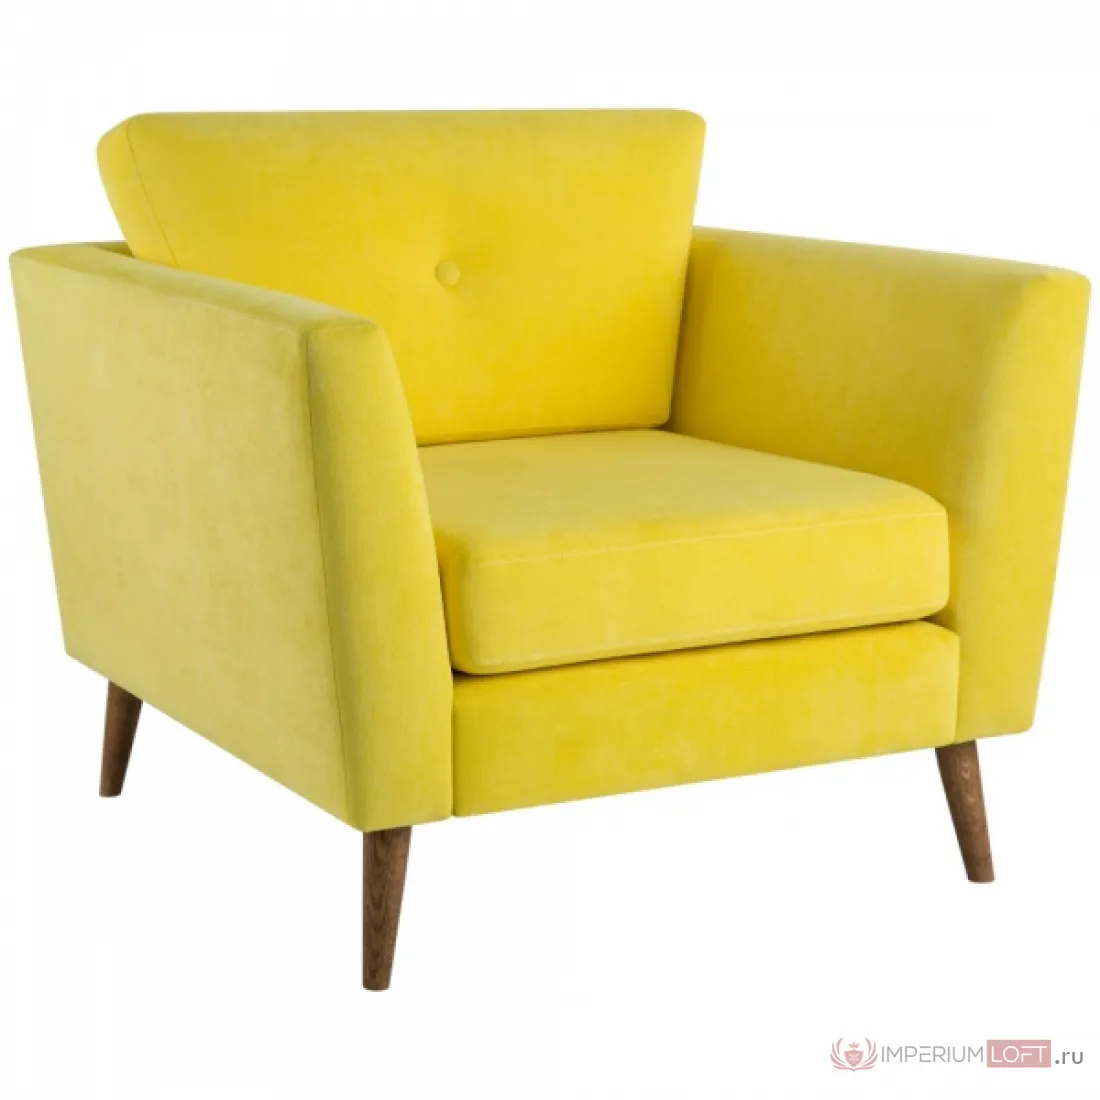 Yellow chair. Кресло Decor Yellow. Кресло современное. Кресло мягкое желтое. Jyoltoe kreslo.